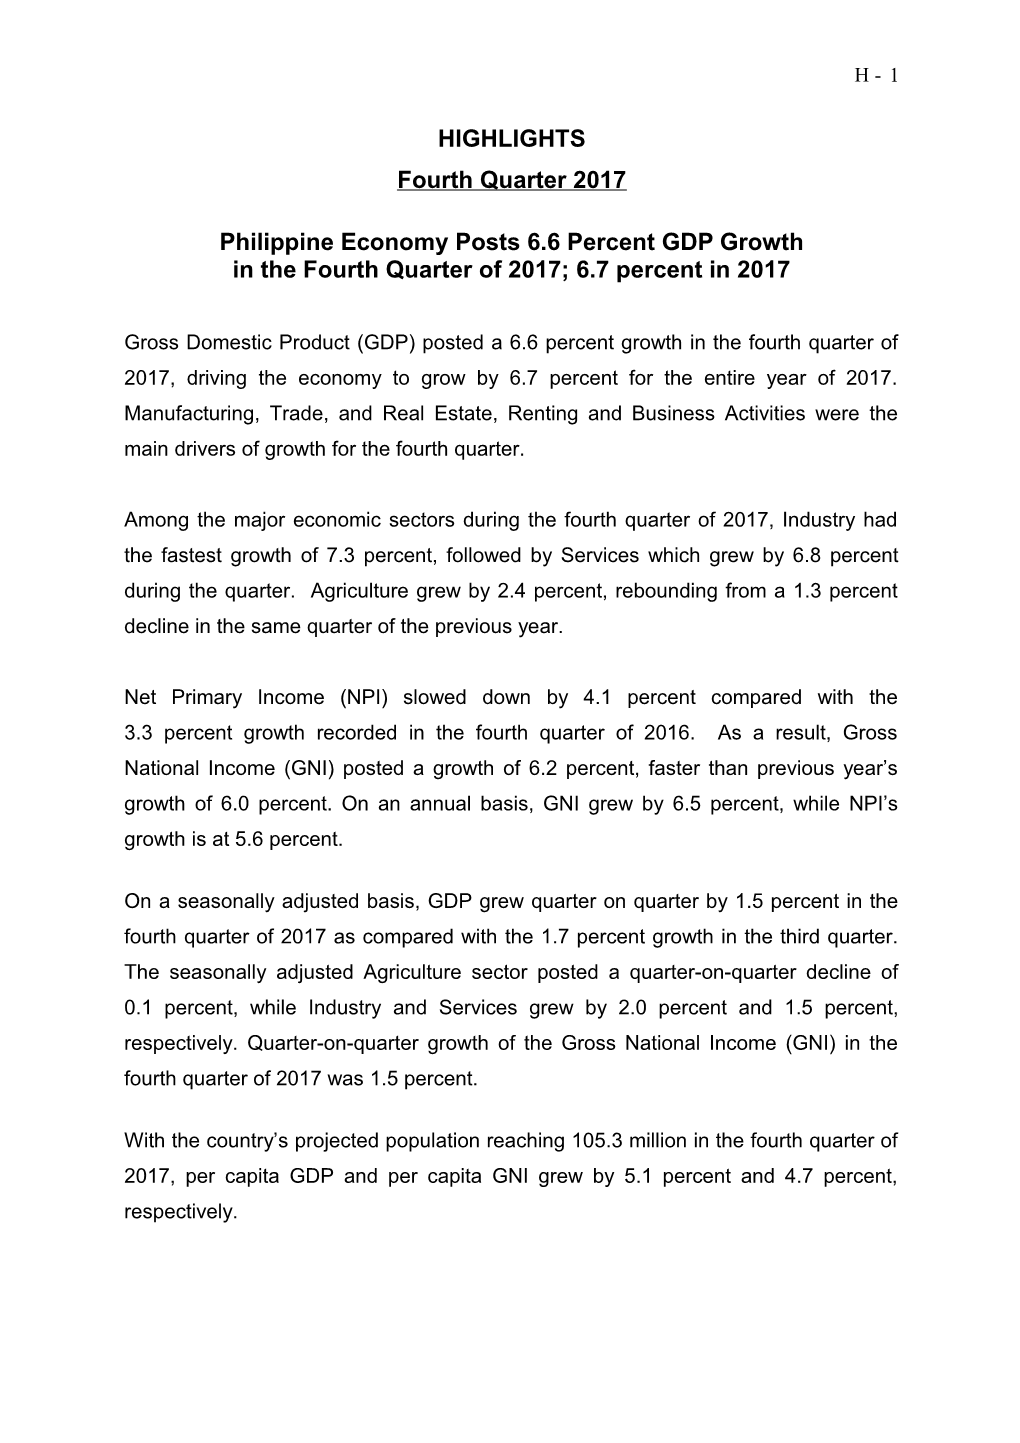 Philippine Economy Posts 6.6 Percent GDP Growth